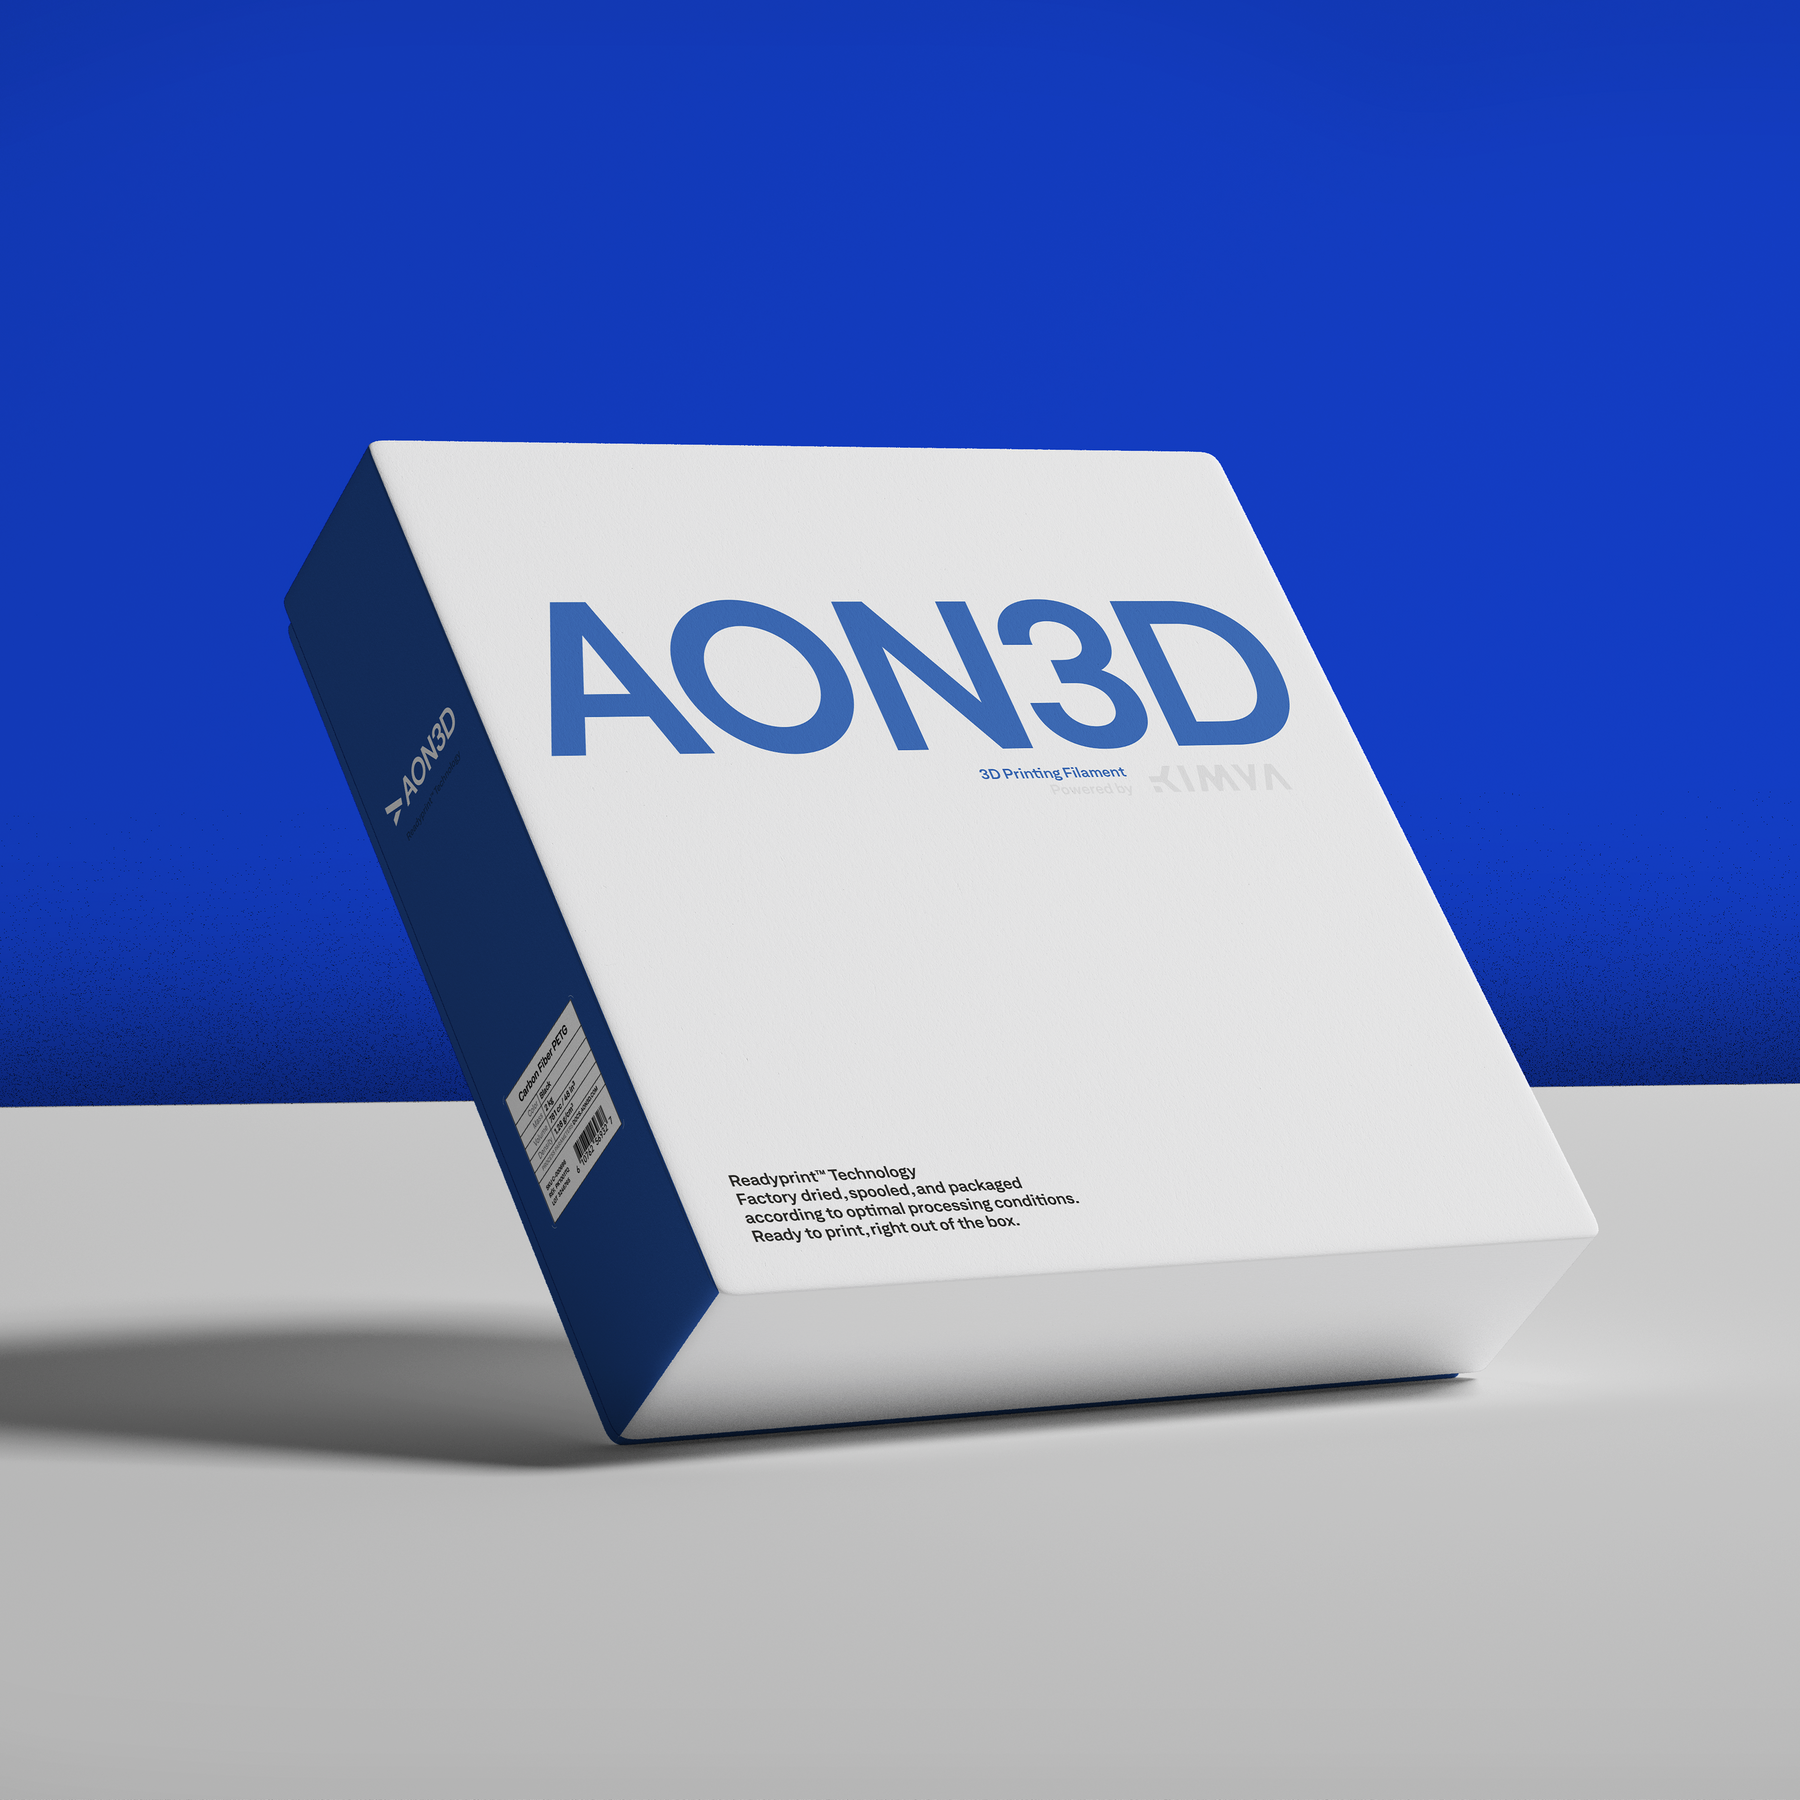 AON3D ReadyPrint™ PETG Filament, Black, 1.75mm, 2kg Powered by Kimya